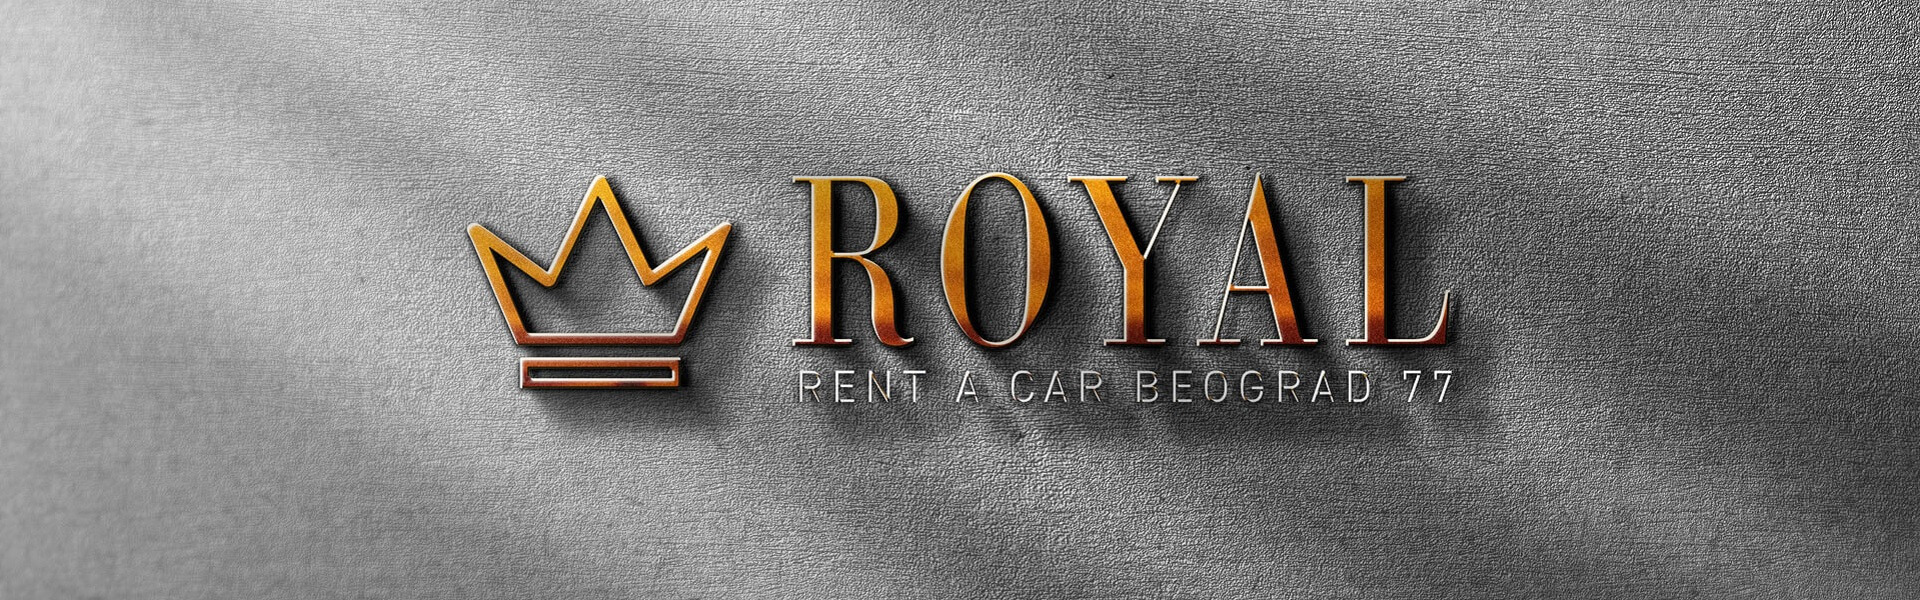 Rent a car Beograd Royal | Ginekolosko akuserska klinika